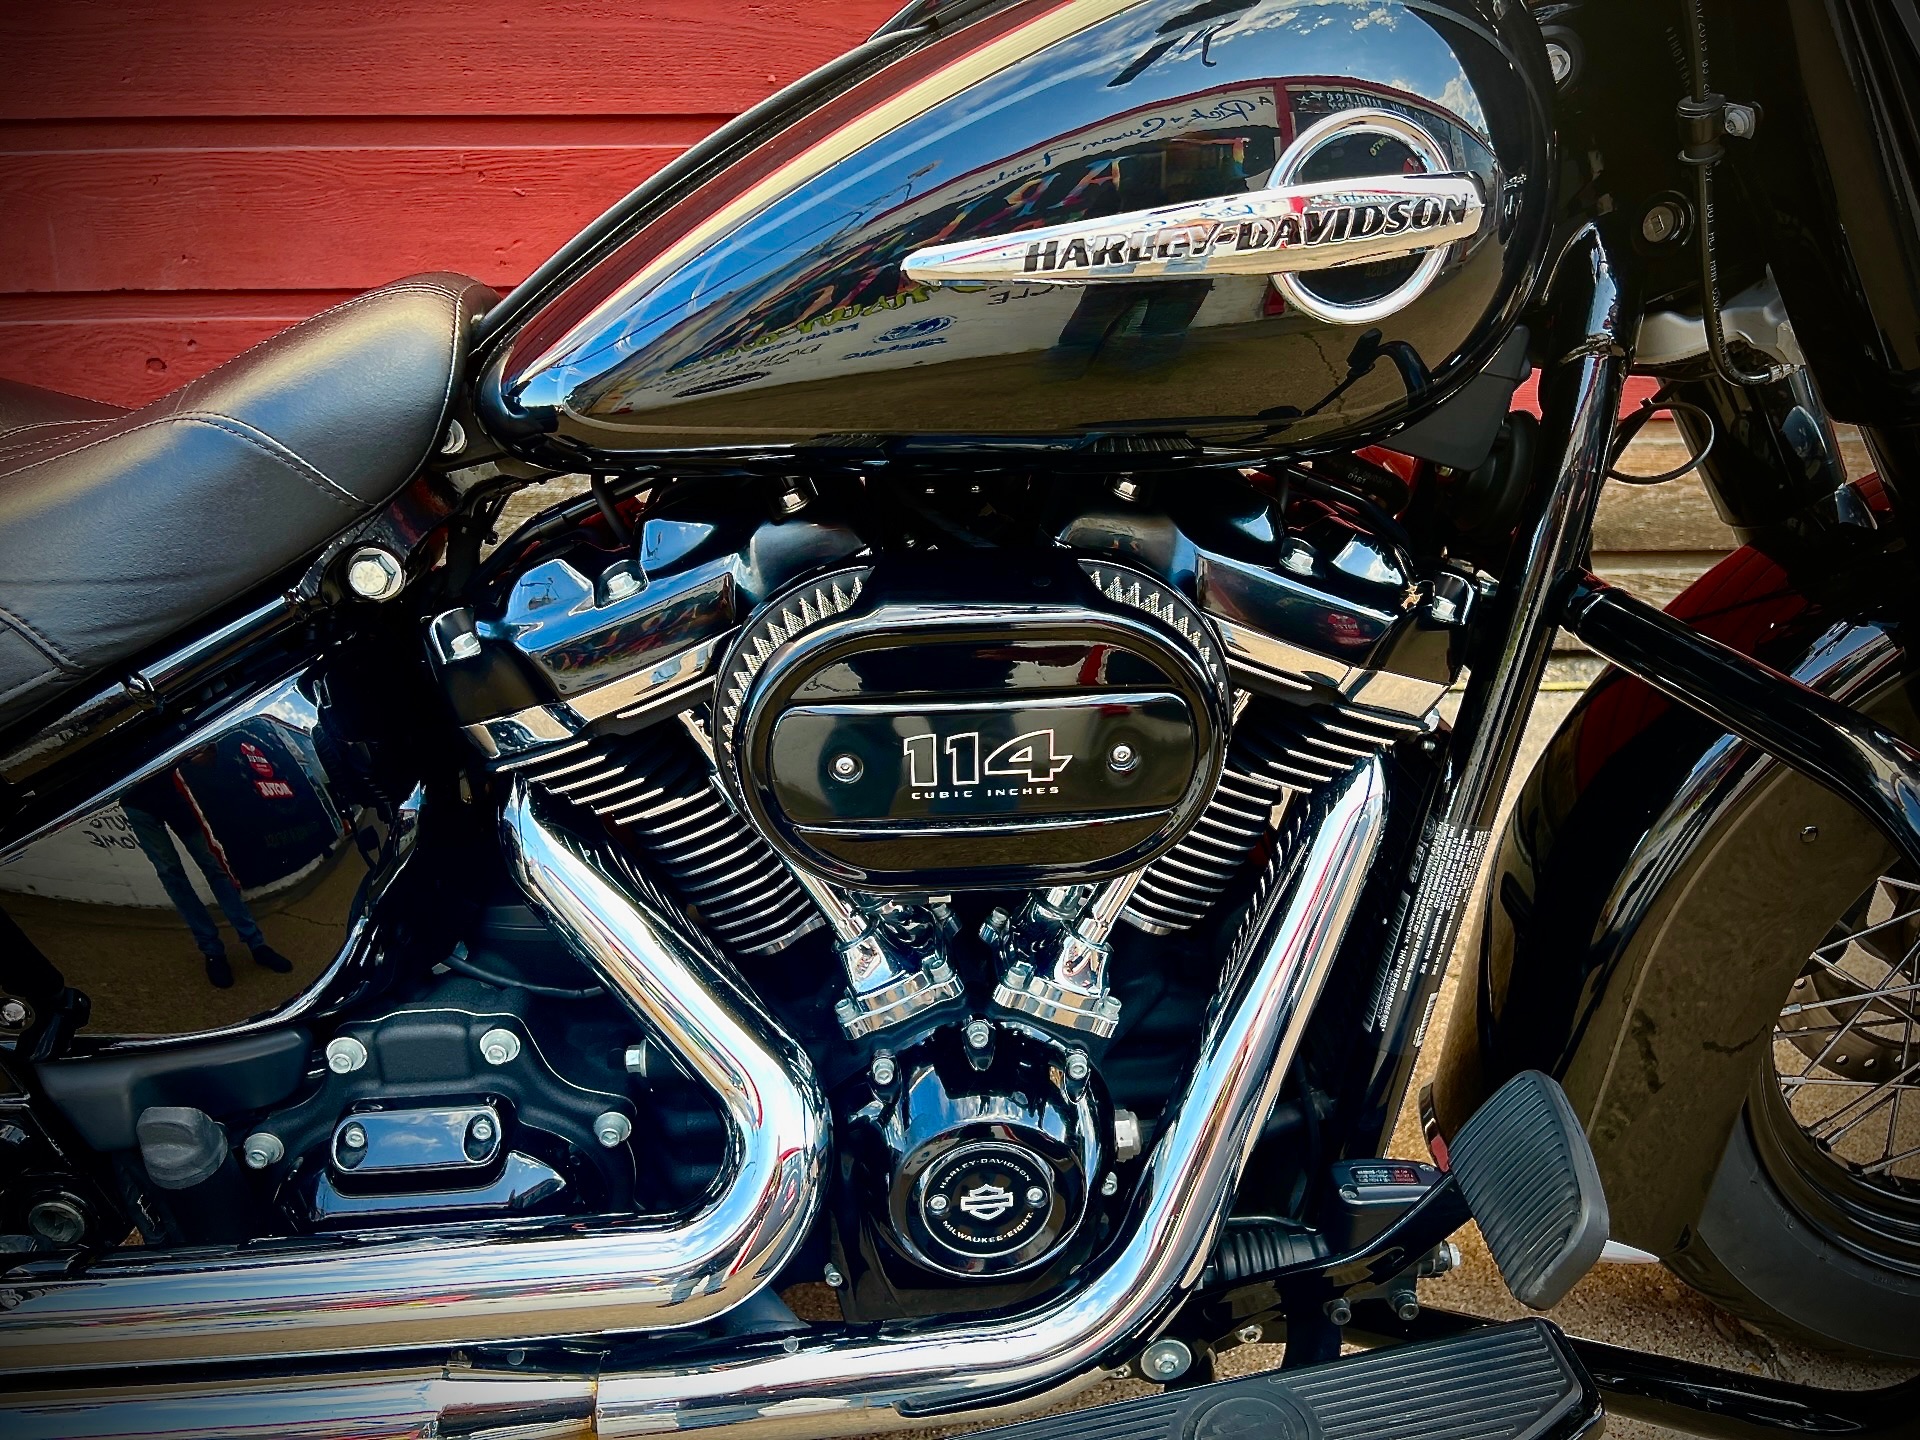 2019 Harley-Davidson Heritage Classic 114 in Dallas, Texas - Photo 4